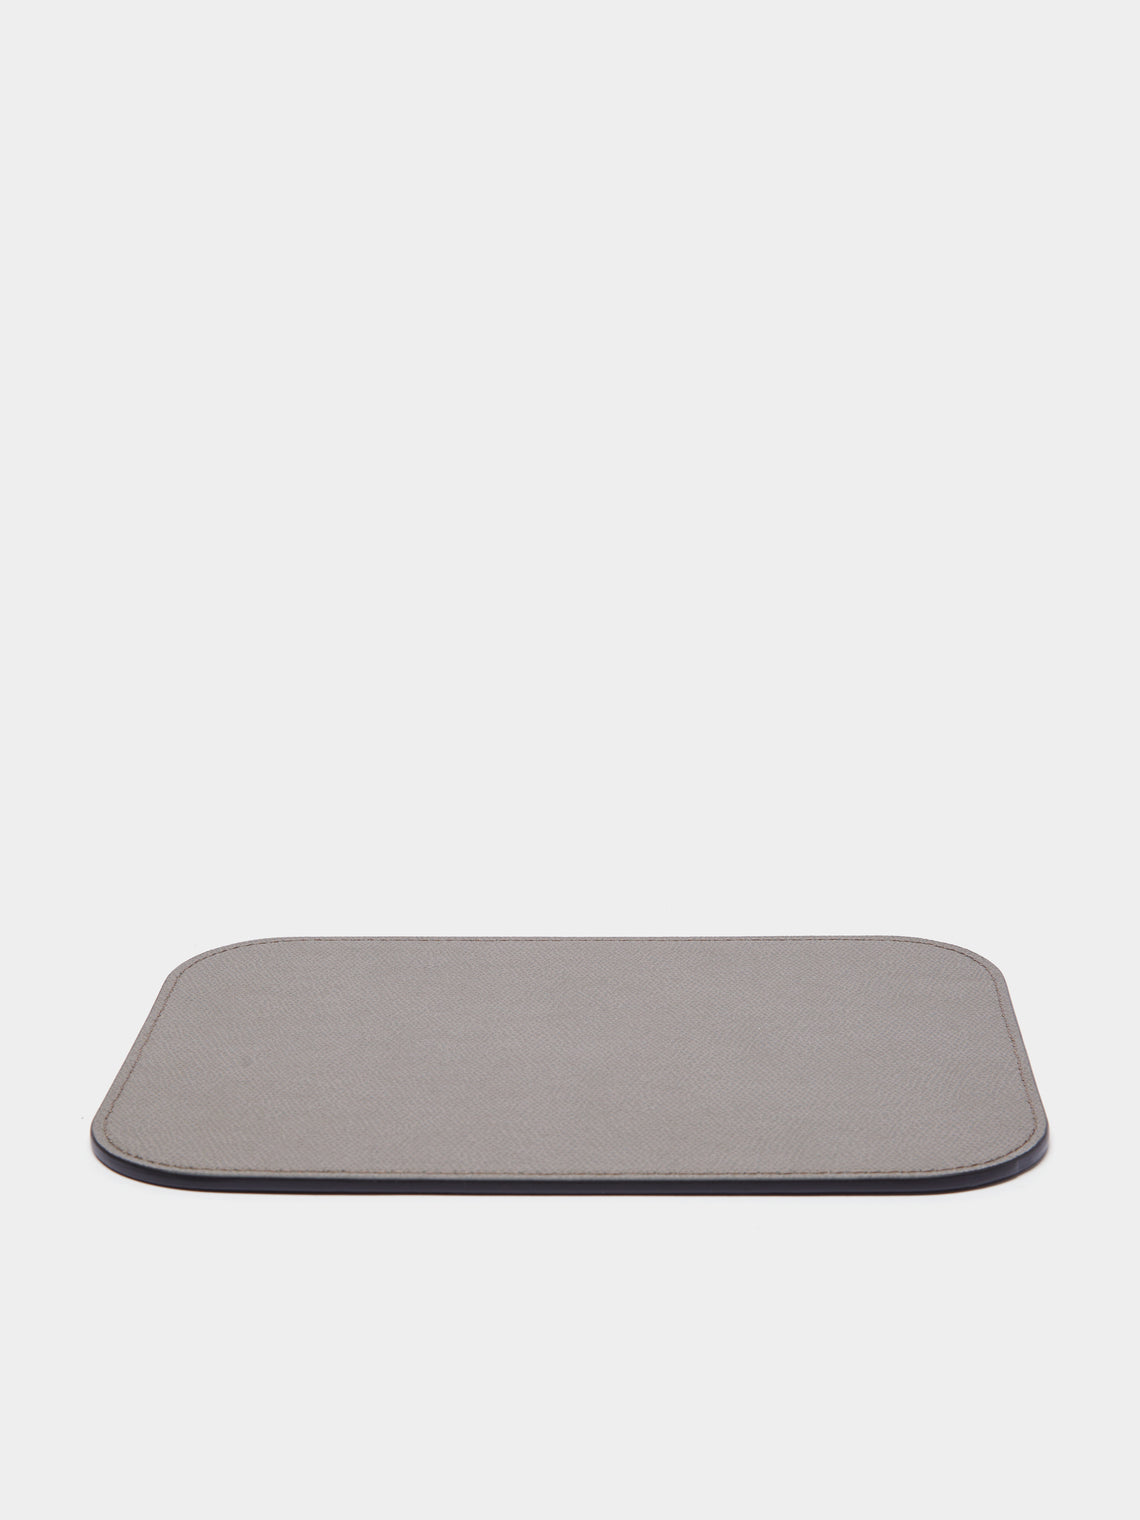 Giobagnara - Polo Leather Mouse Pad - Grey - ABASK